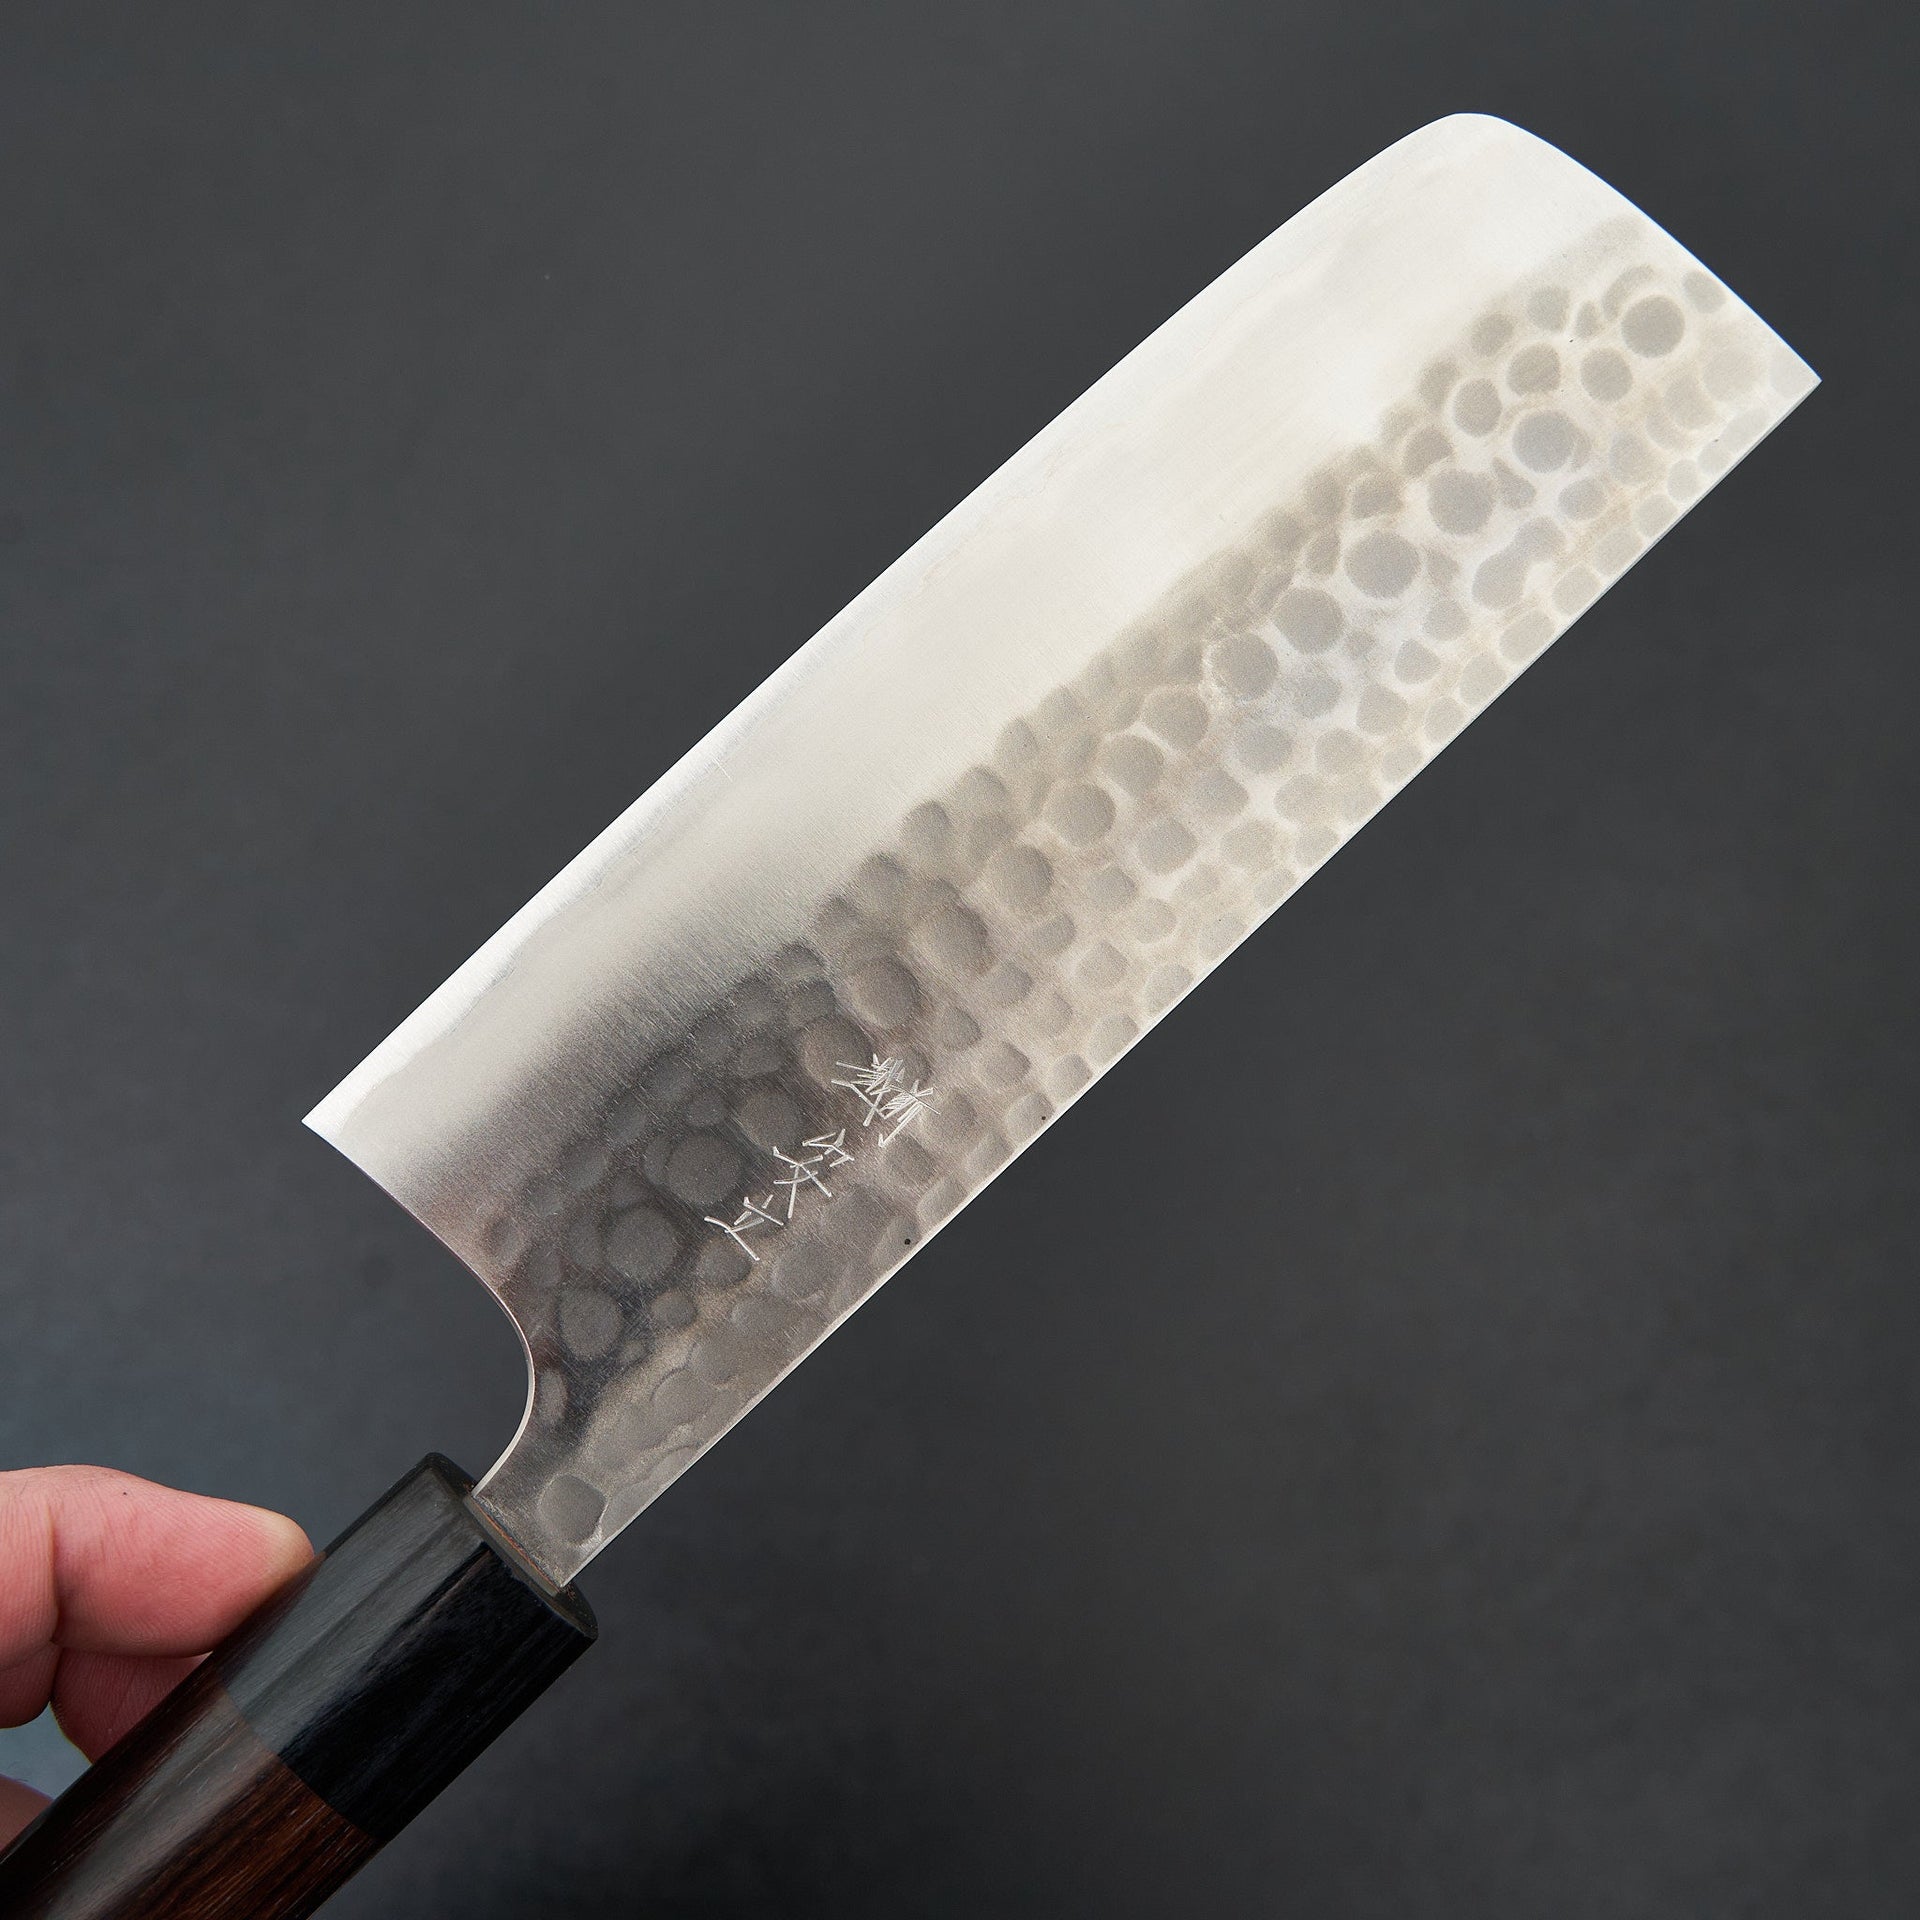 Katsushige Anryu Tsuchime Nakiri 165mm-Knife-Katsushige Anryu-Carbon Knife Co